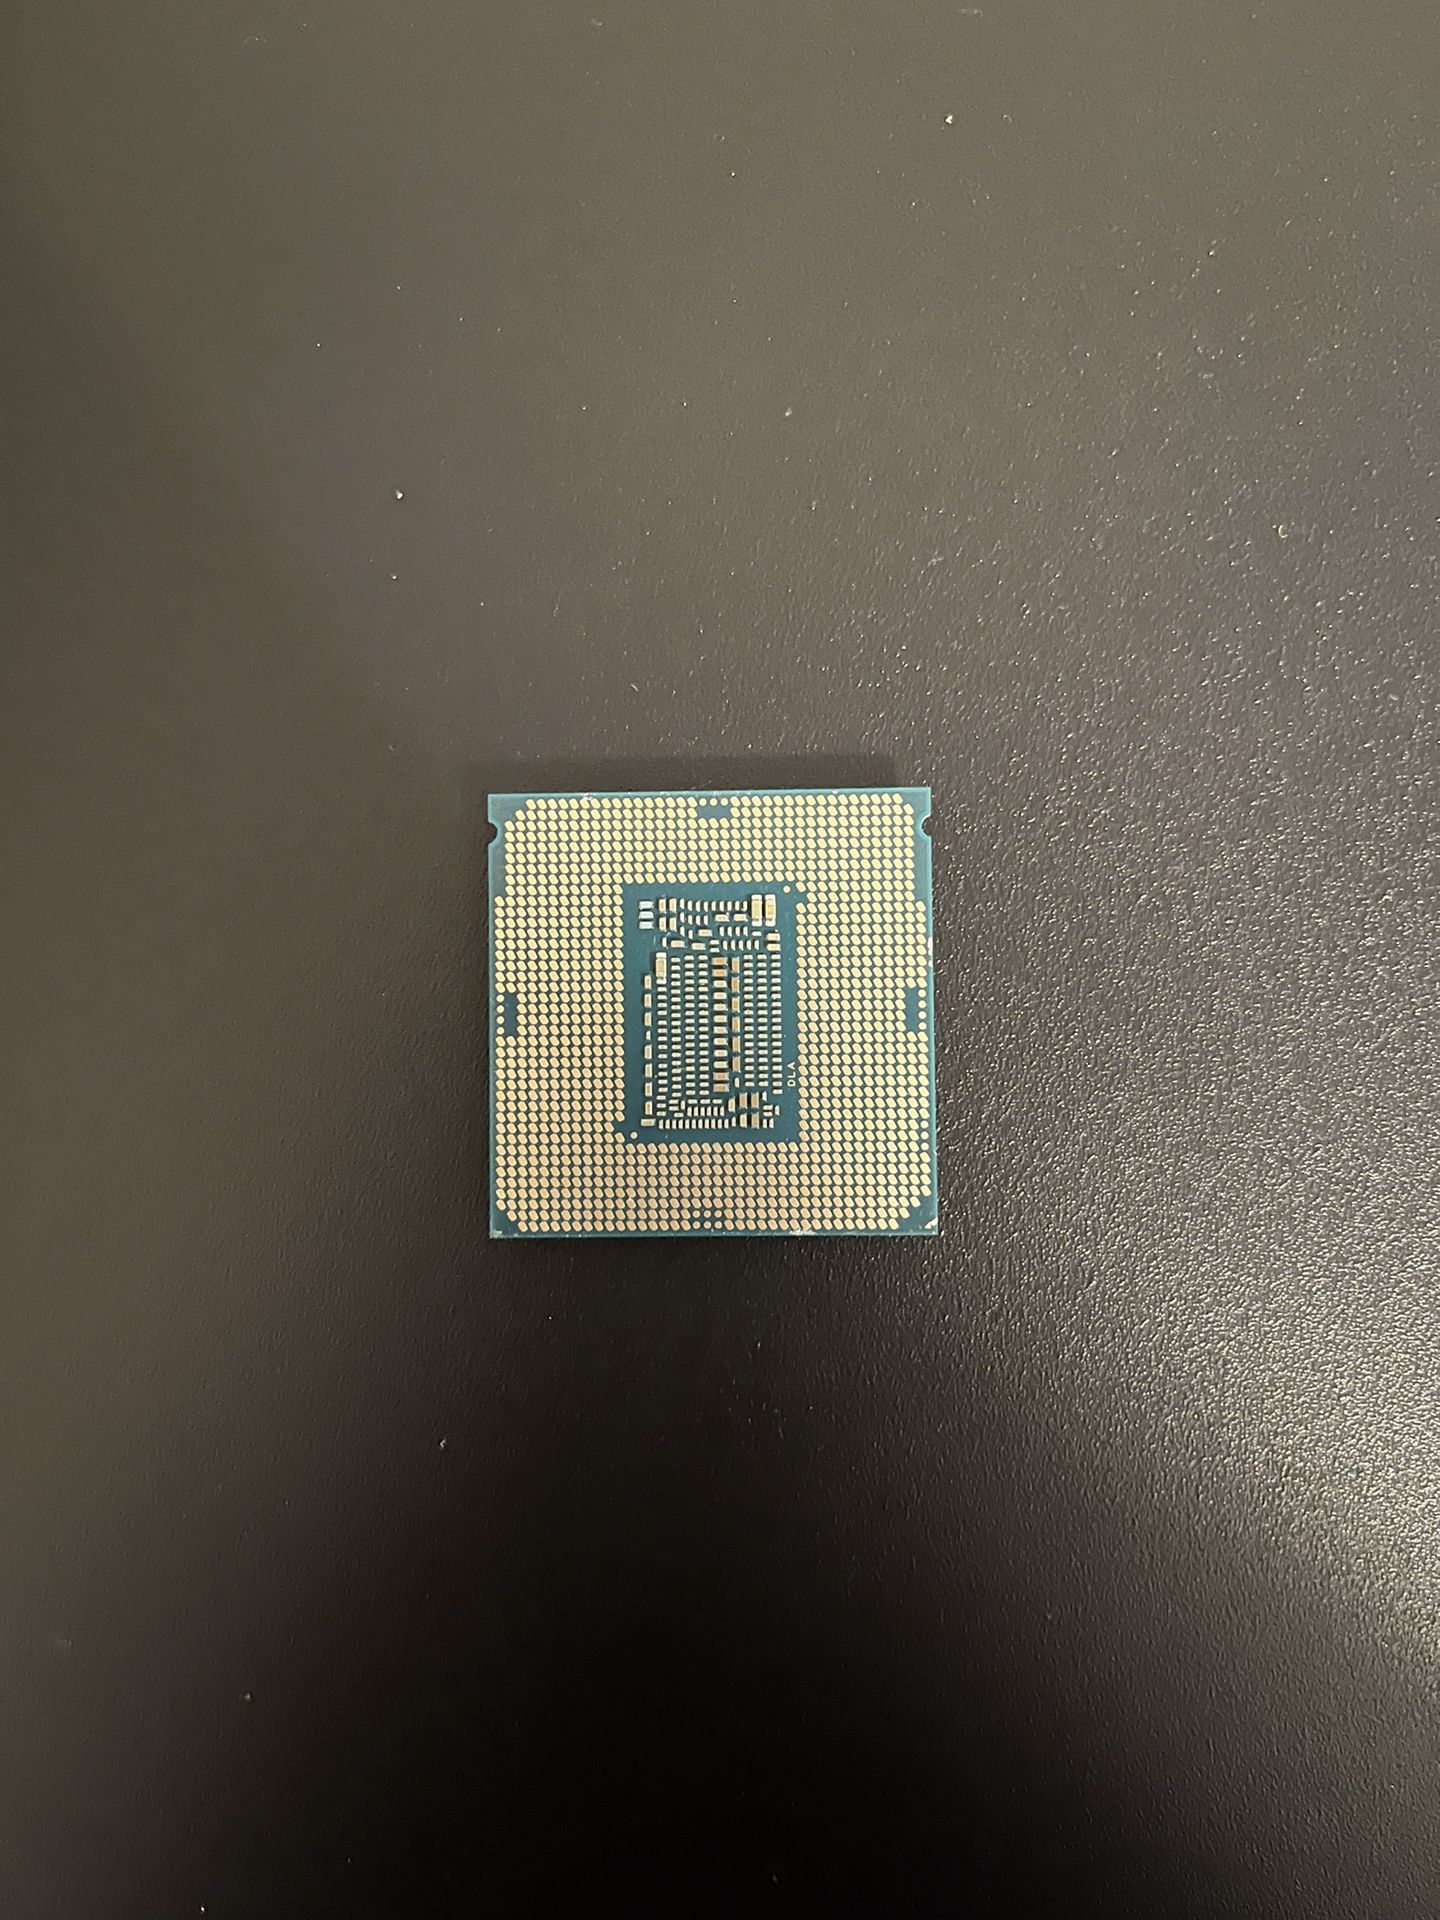 Intel® Core™ i7-9700K Processor (12M Cache, up to 4.90 GHz)